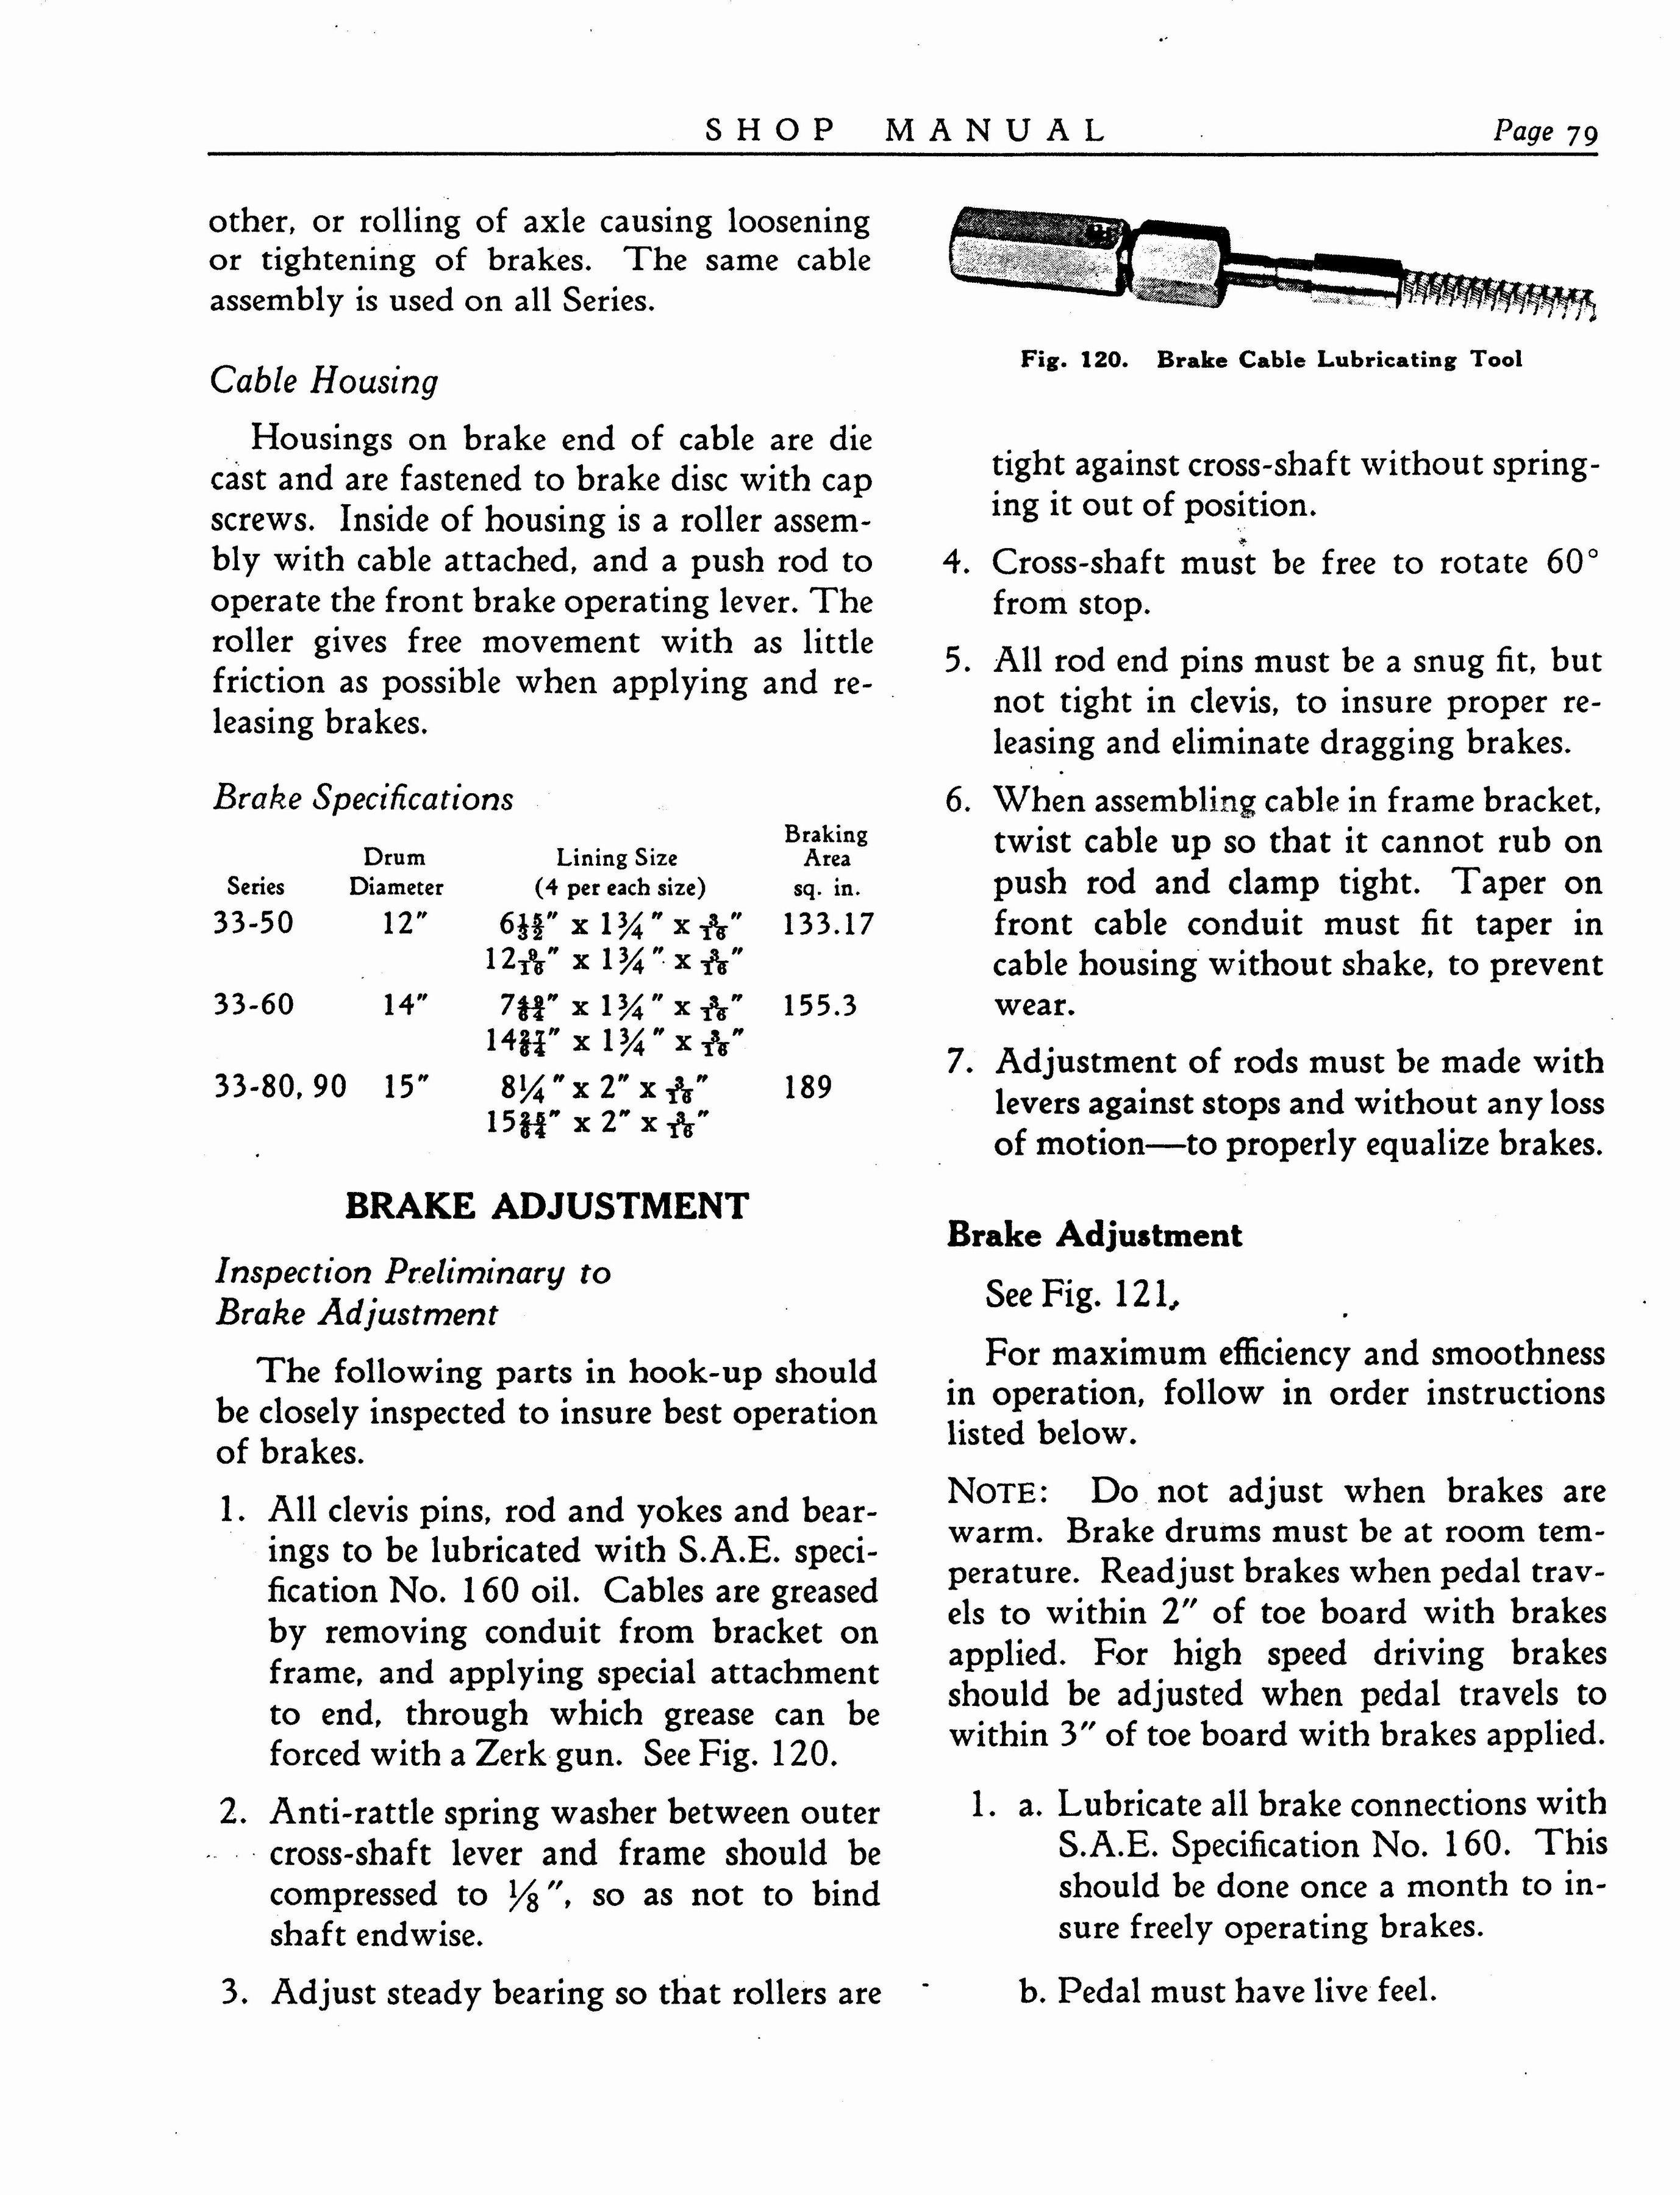 n_1933 Buick Shop Manual_Page_080.jpg